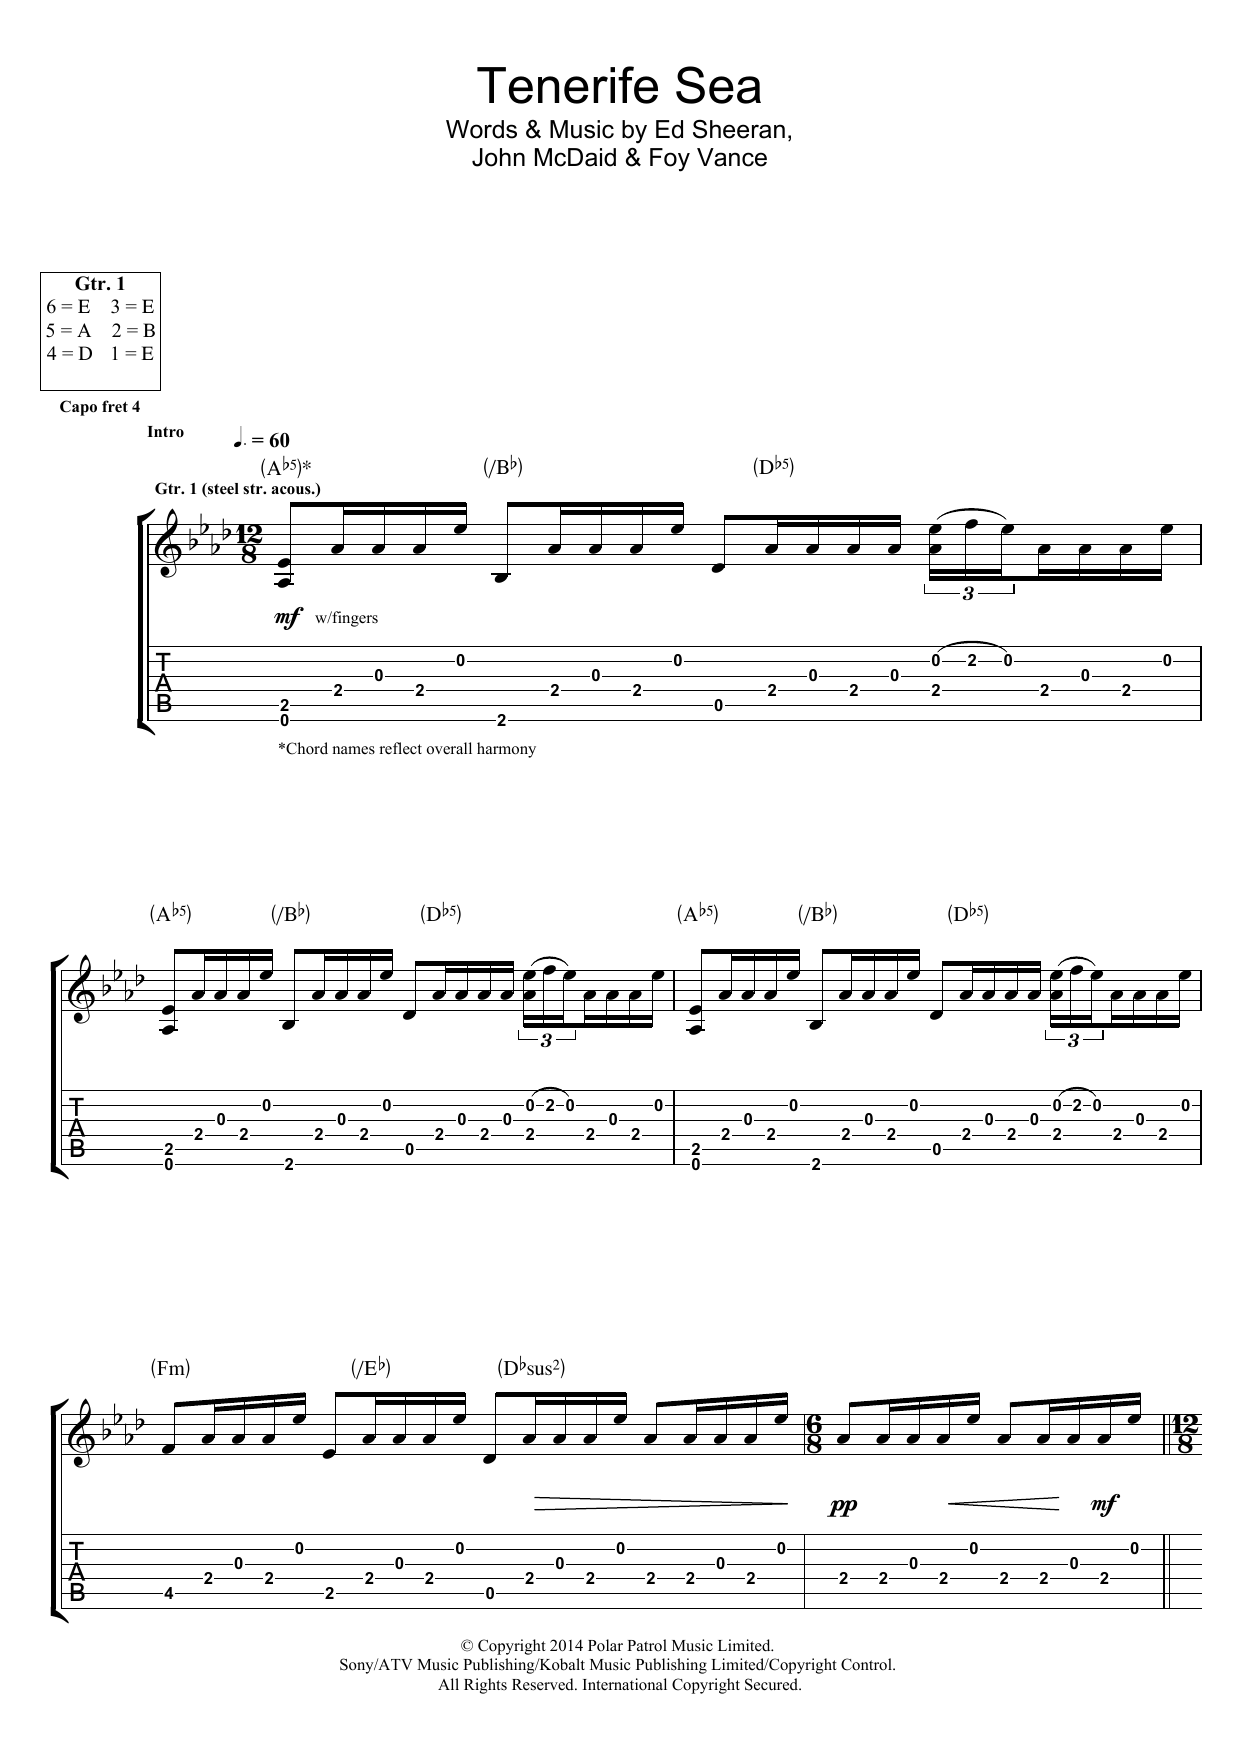 Ed Sheeran Tenerife Sea Sheet Music Notes & Chords for Piano, Vocal & Guitar (Right-Hand Melody) - Download or Print PDF